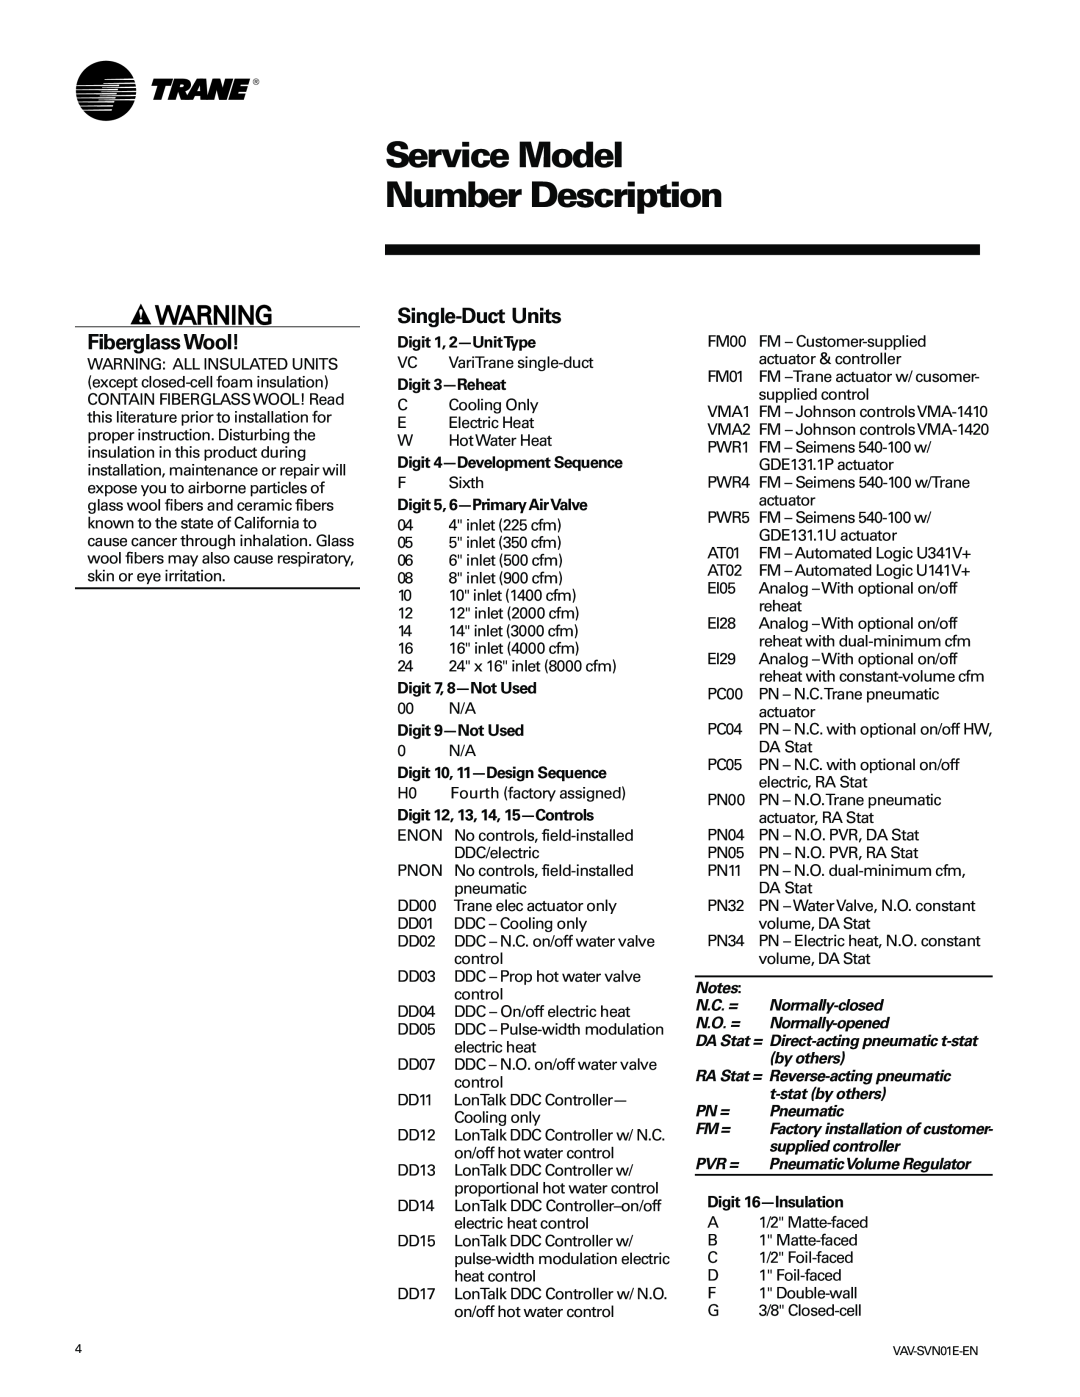 Trane VAV-SVN01E-EN Service Model Number Description, Fiberglass Wool, Single-DuctUnits, Notes N.C. = Normally-closed 